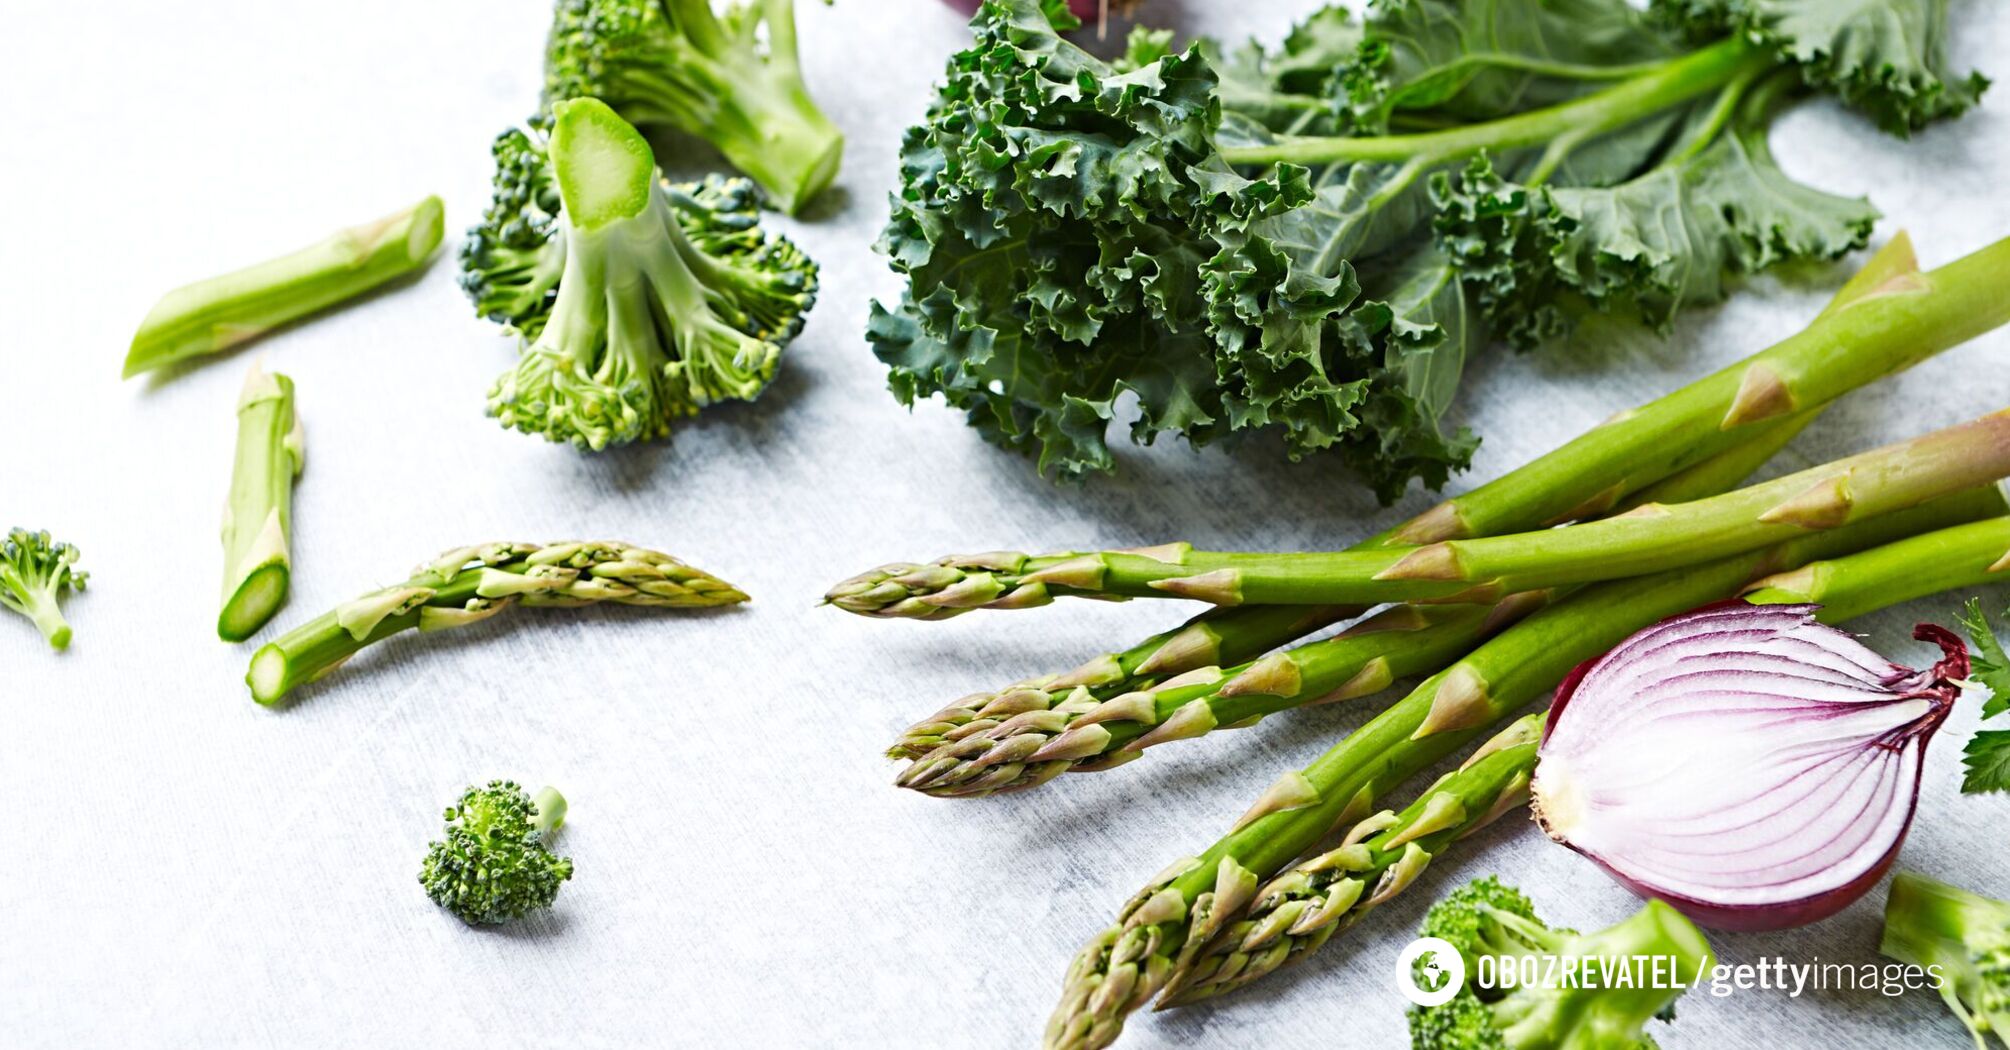 Broccoli prevents inflammatory processes